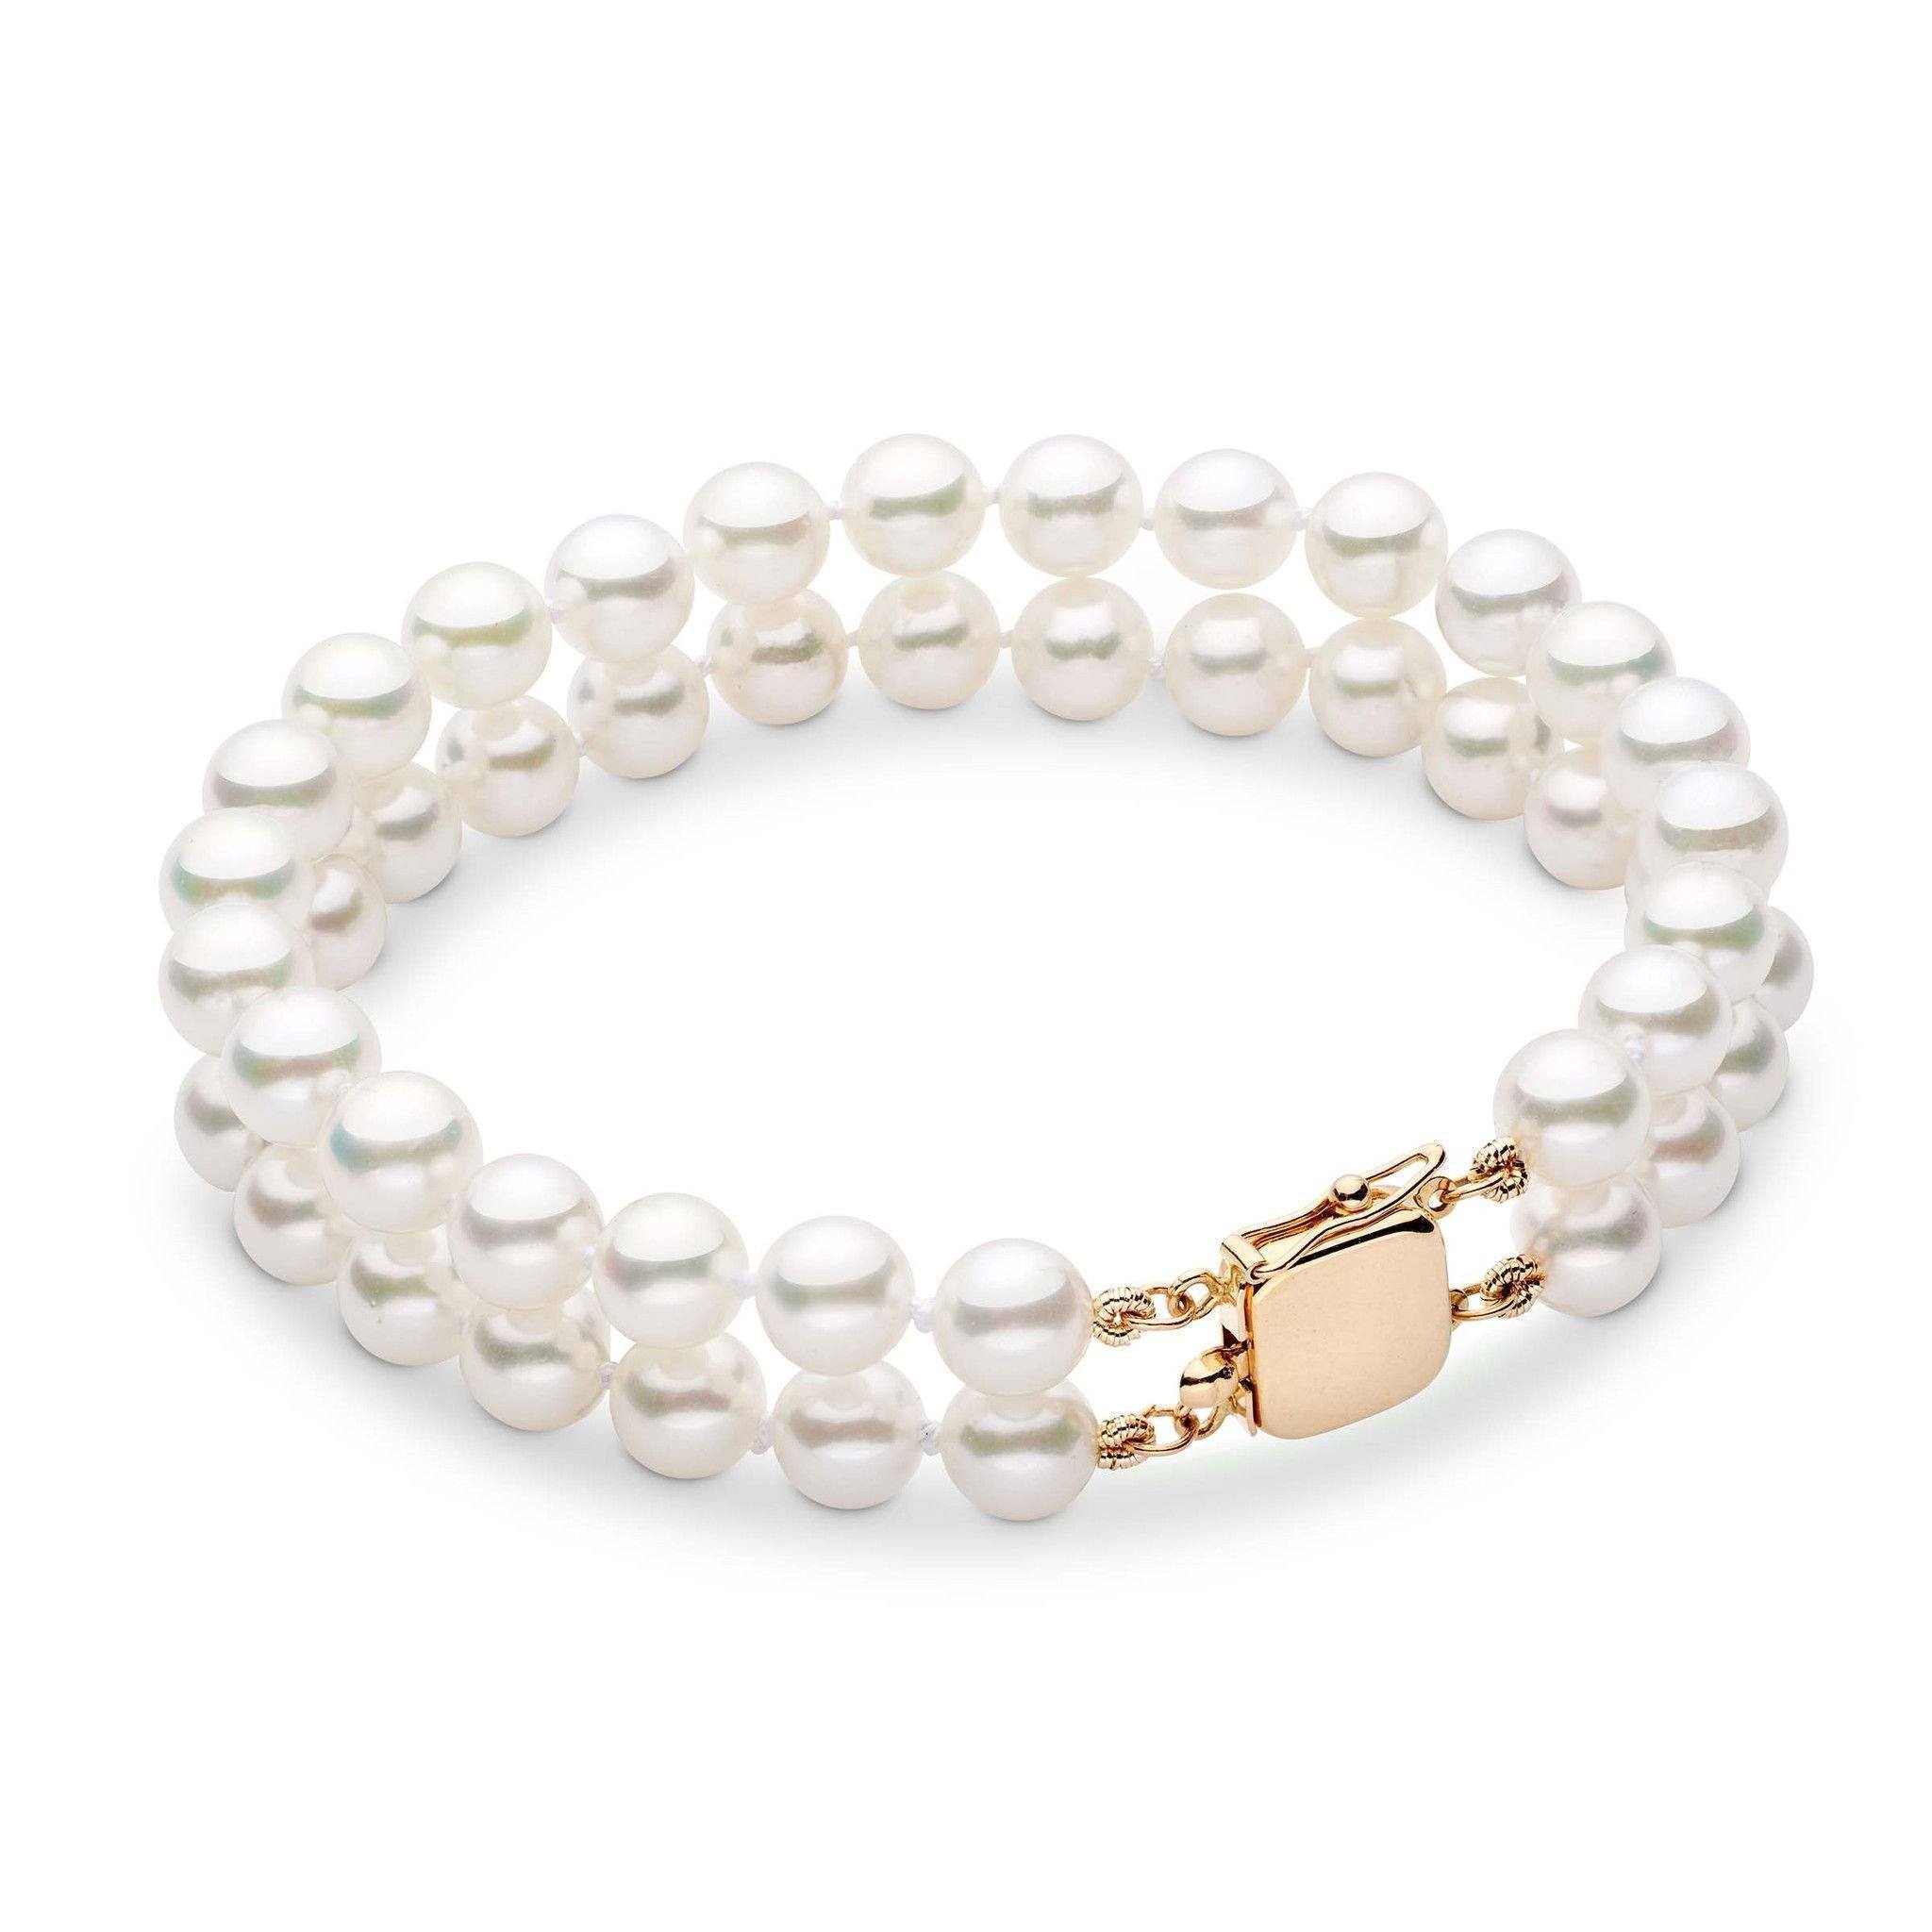 Elegant White Pearl Necklace | Perfect Gift for Brides & Bridesmaids -  Glitz And Love